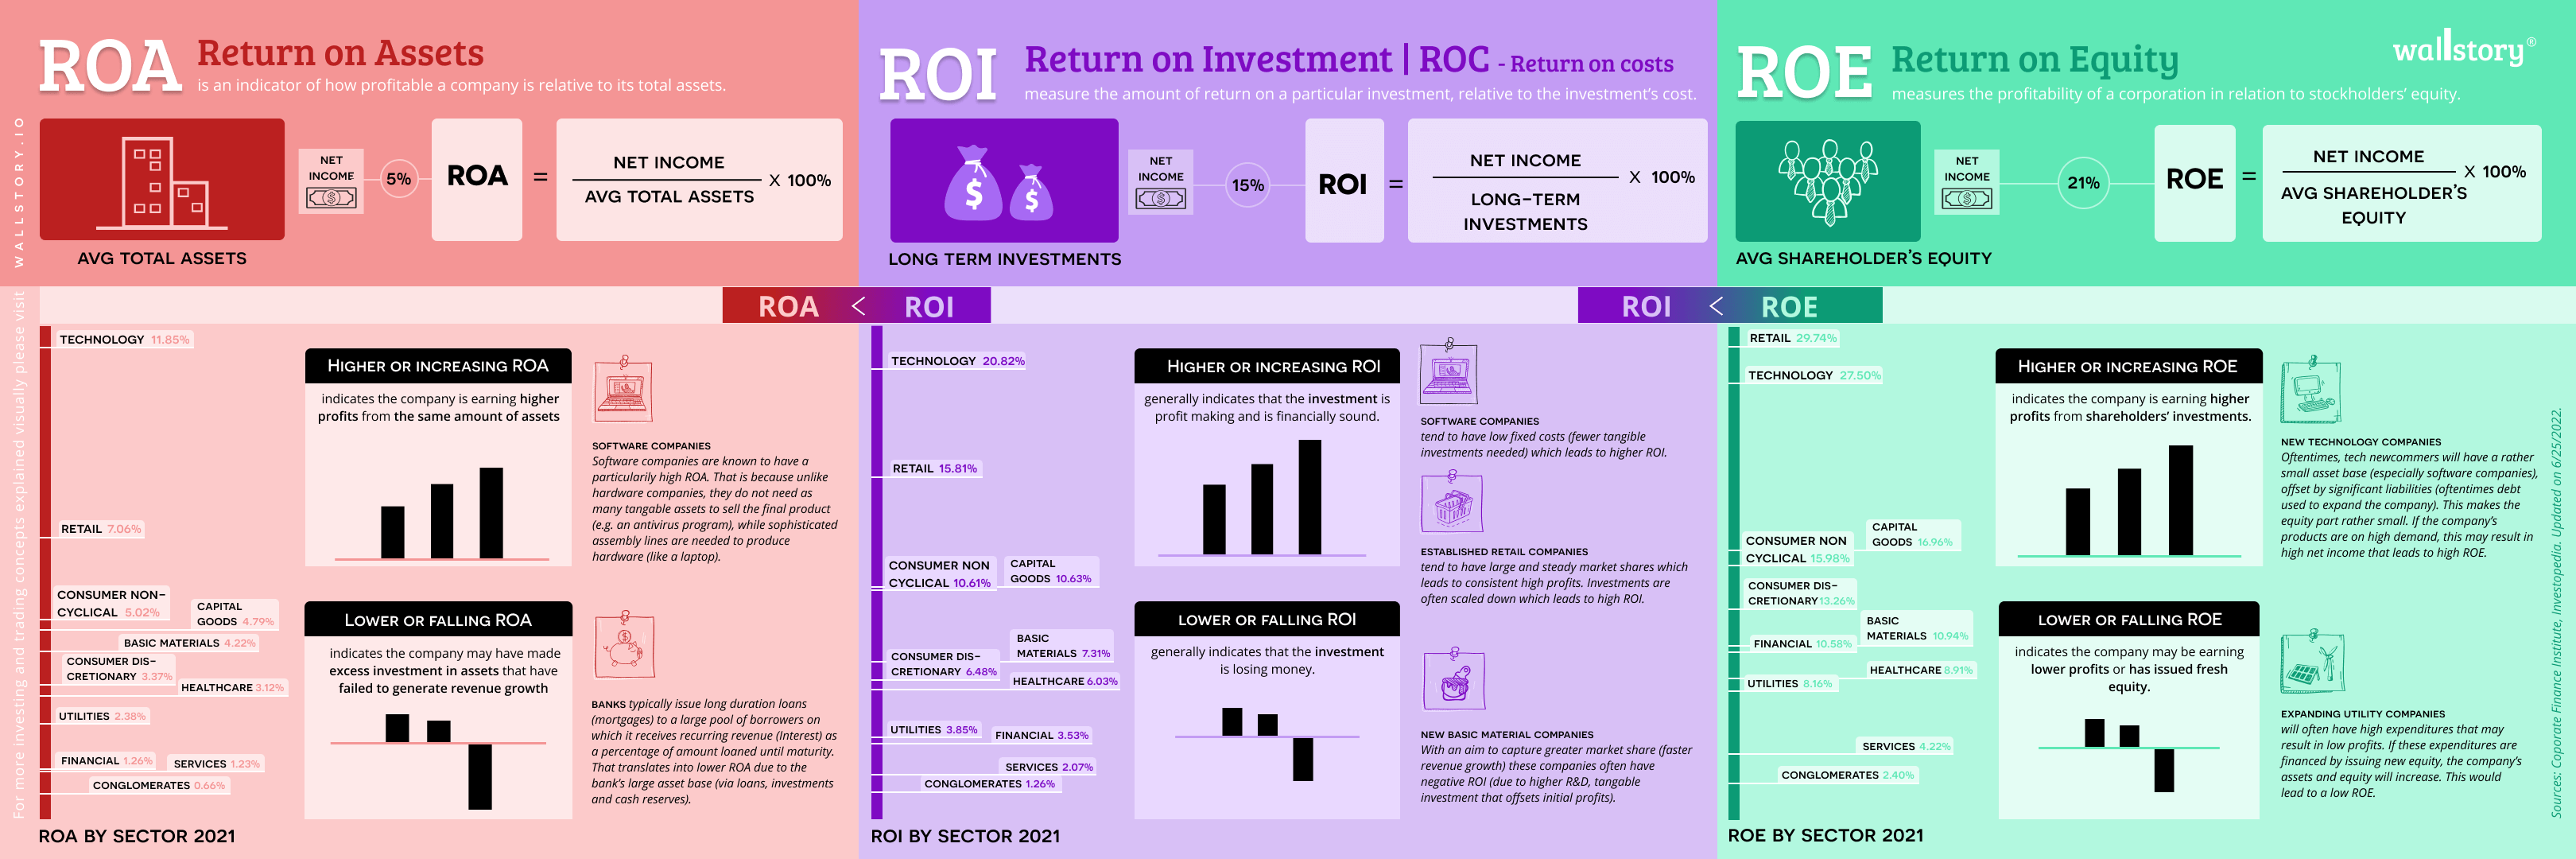 ROE (Return on Equity)